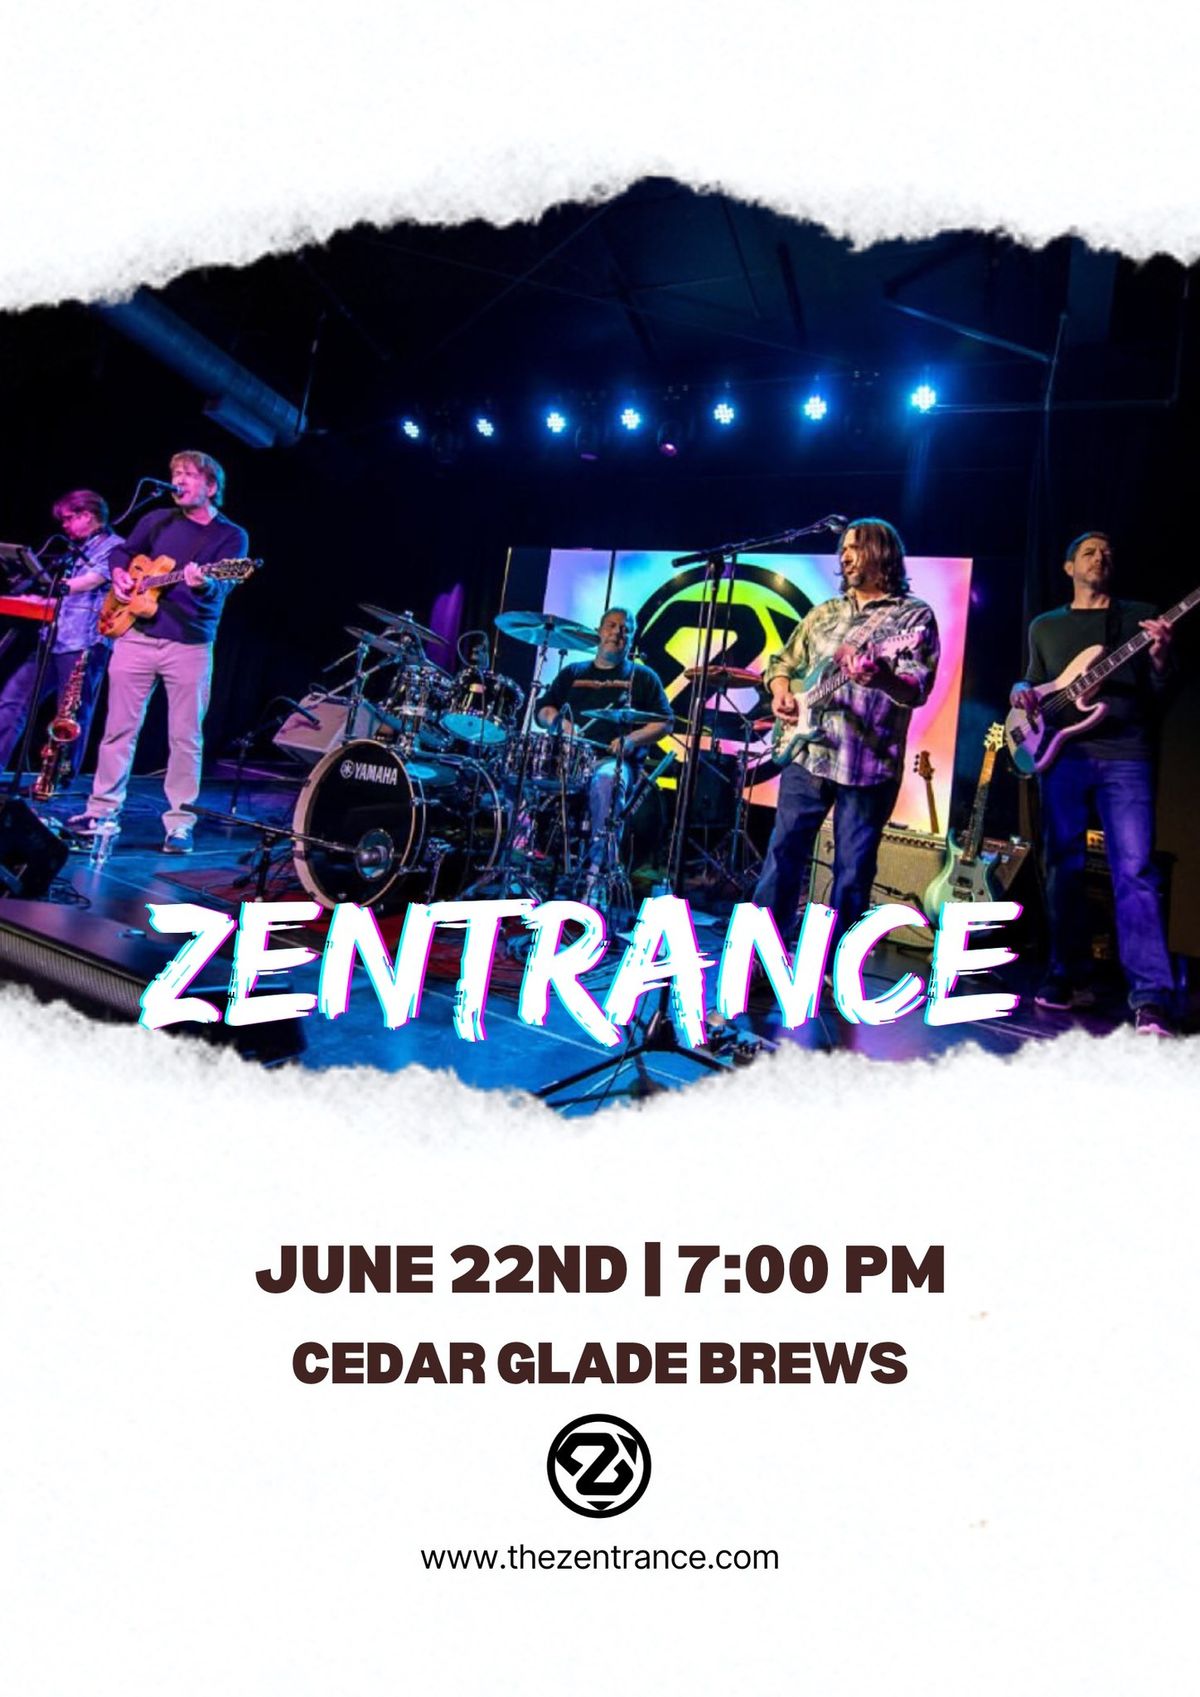 Zentrance Live at Cedar Glade Brews!